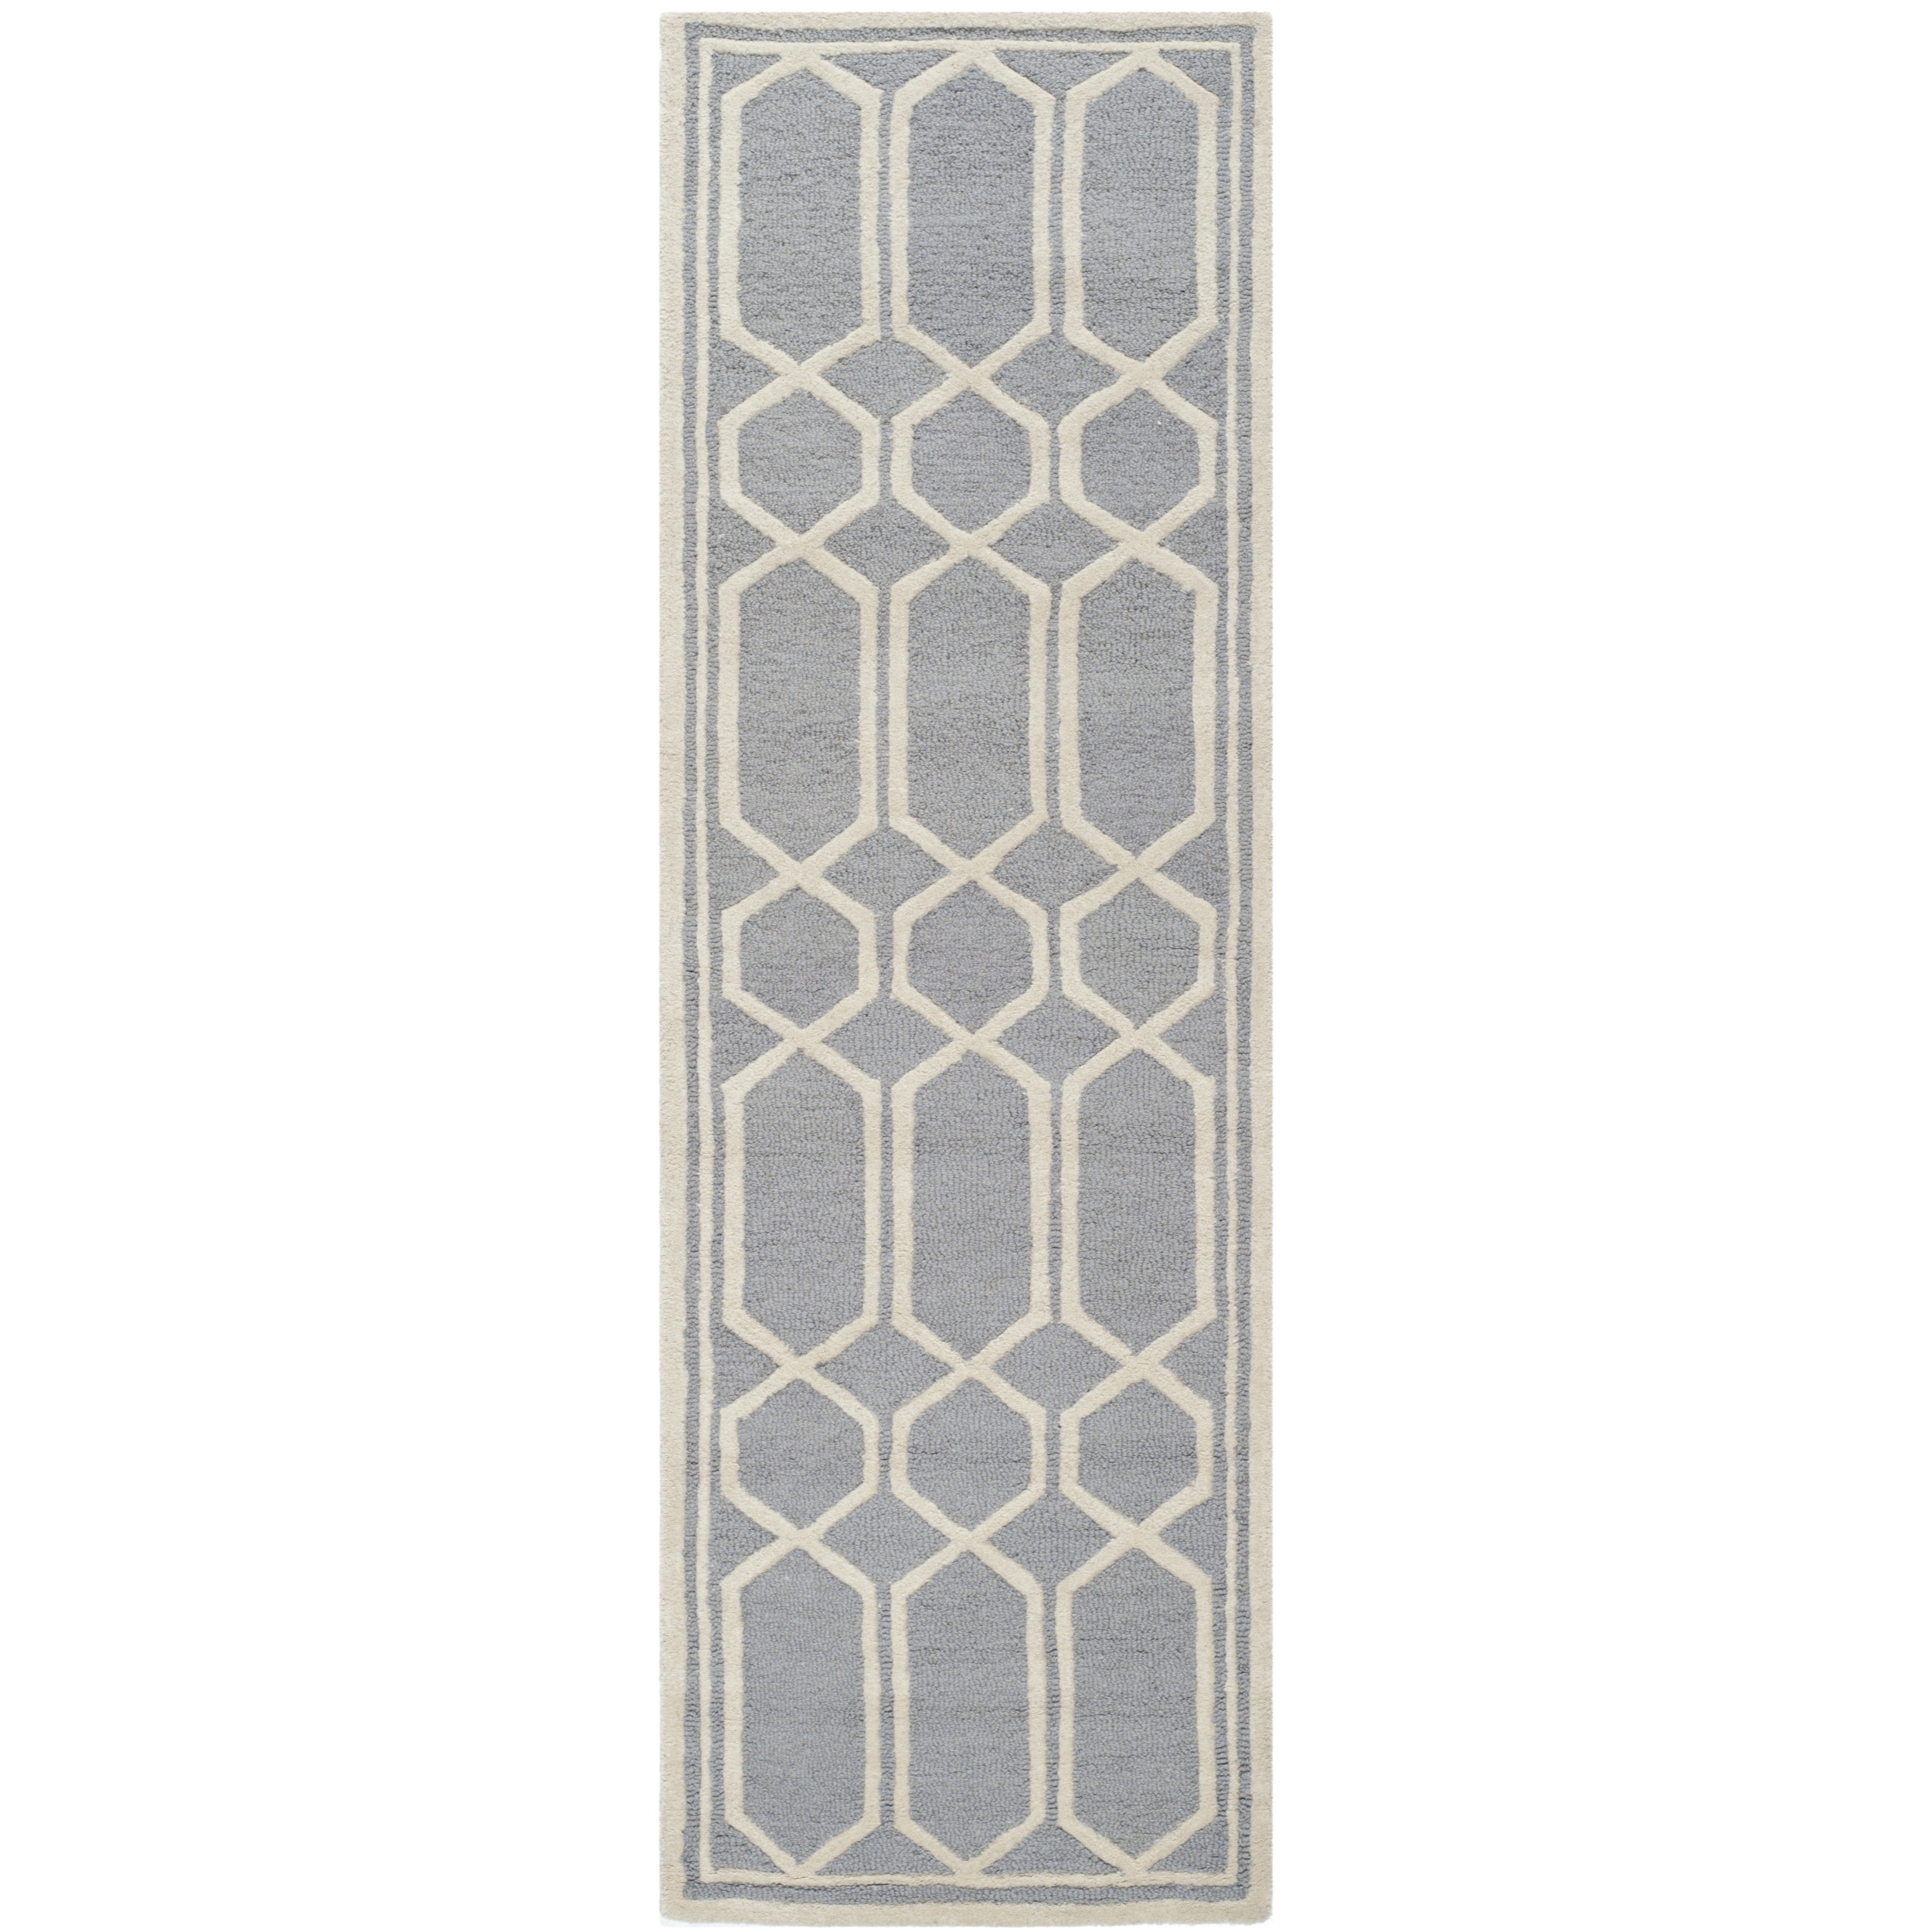 Safavieh Handmade Cambridge Moroccan Silver Tufted Wool Rug (26 X 8)